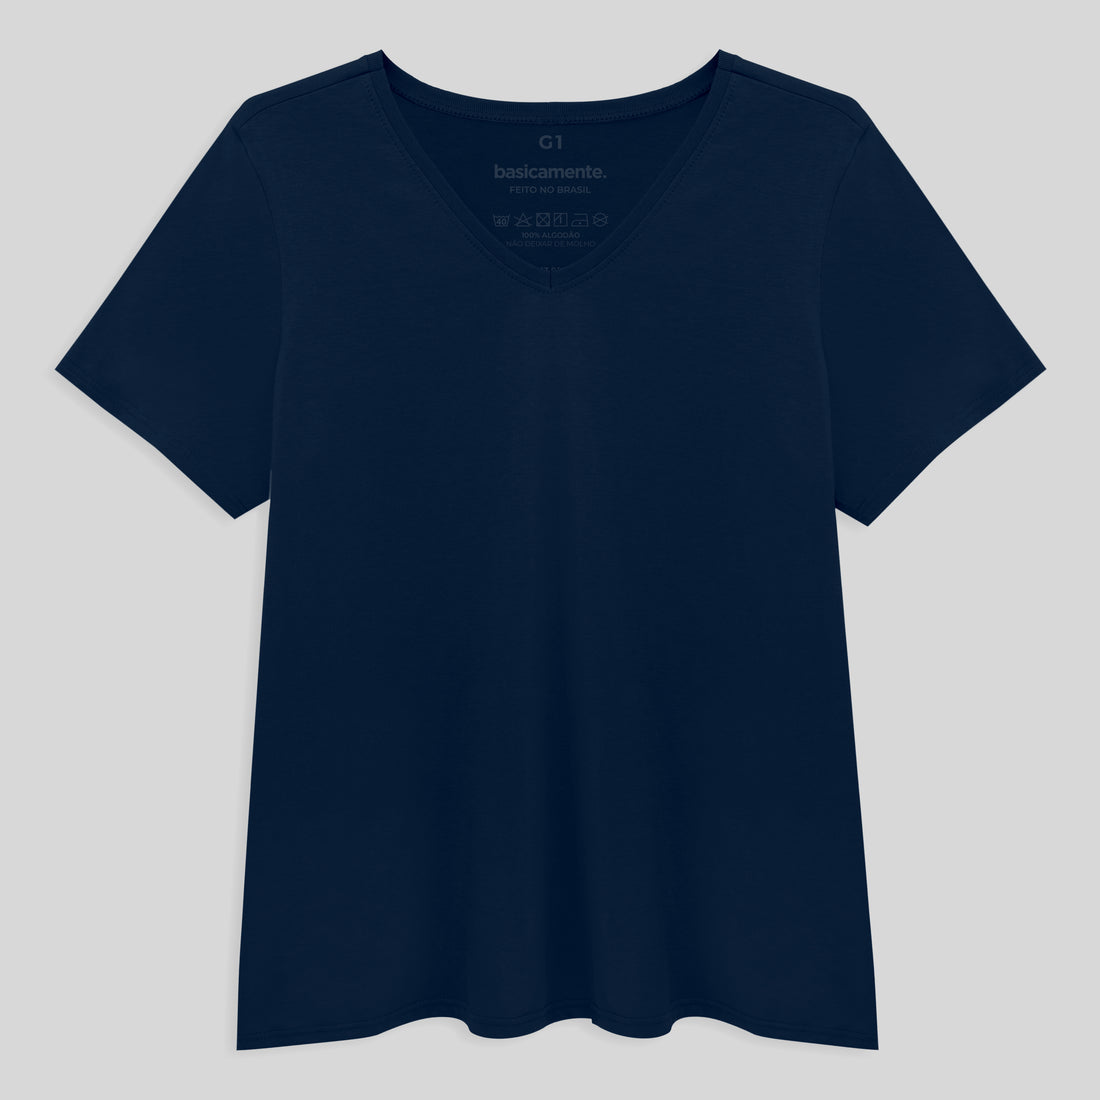 Camiseta Slim Gola V Cotton Plus Size Feminina - Azul Marinho